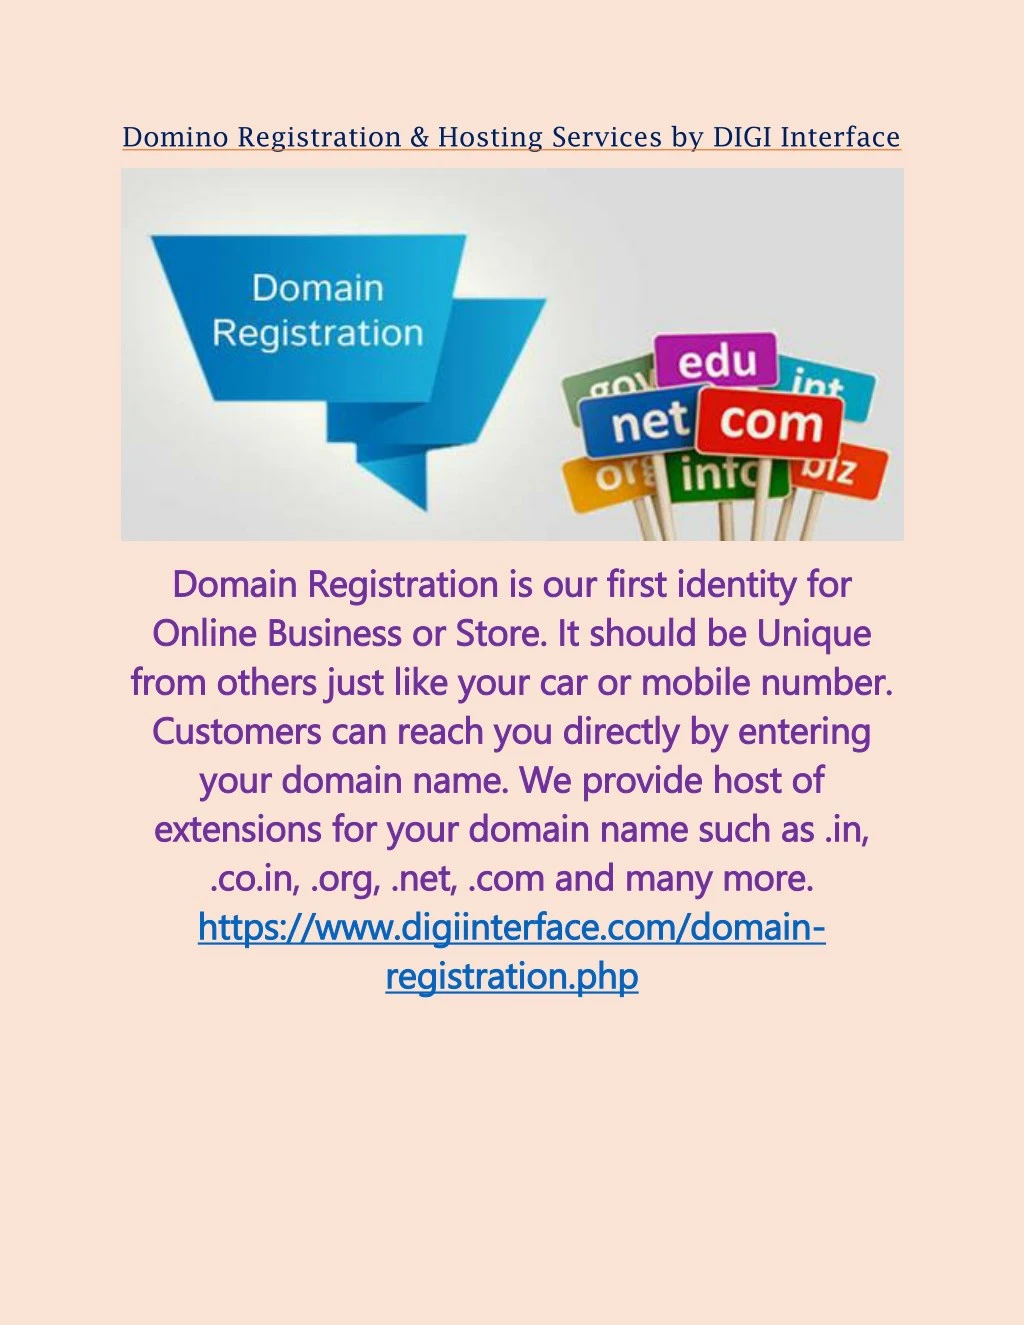 domino registration hosting services by digi